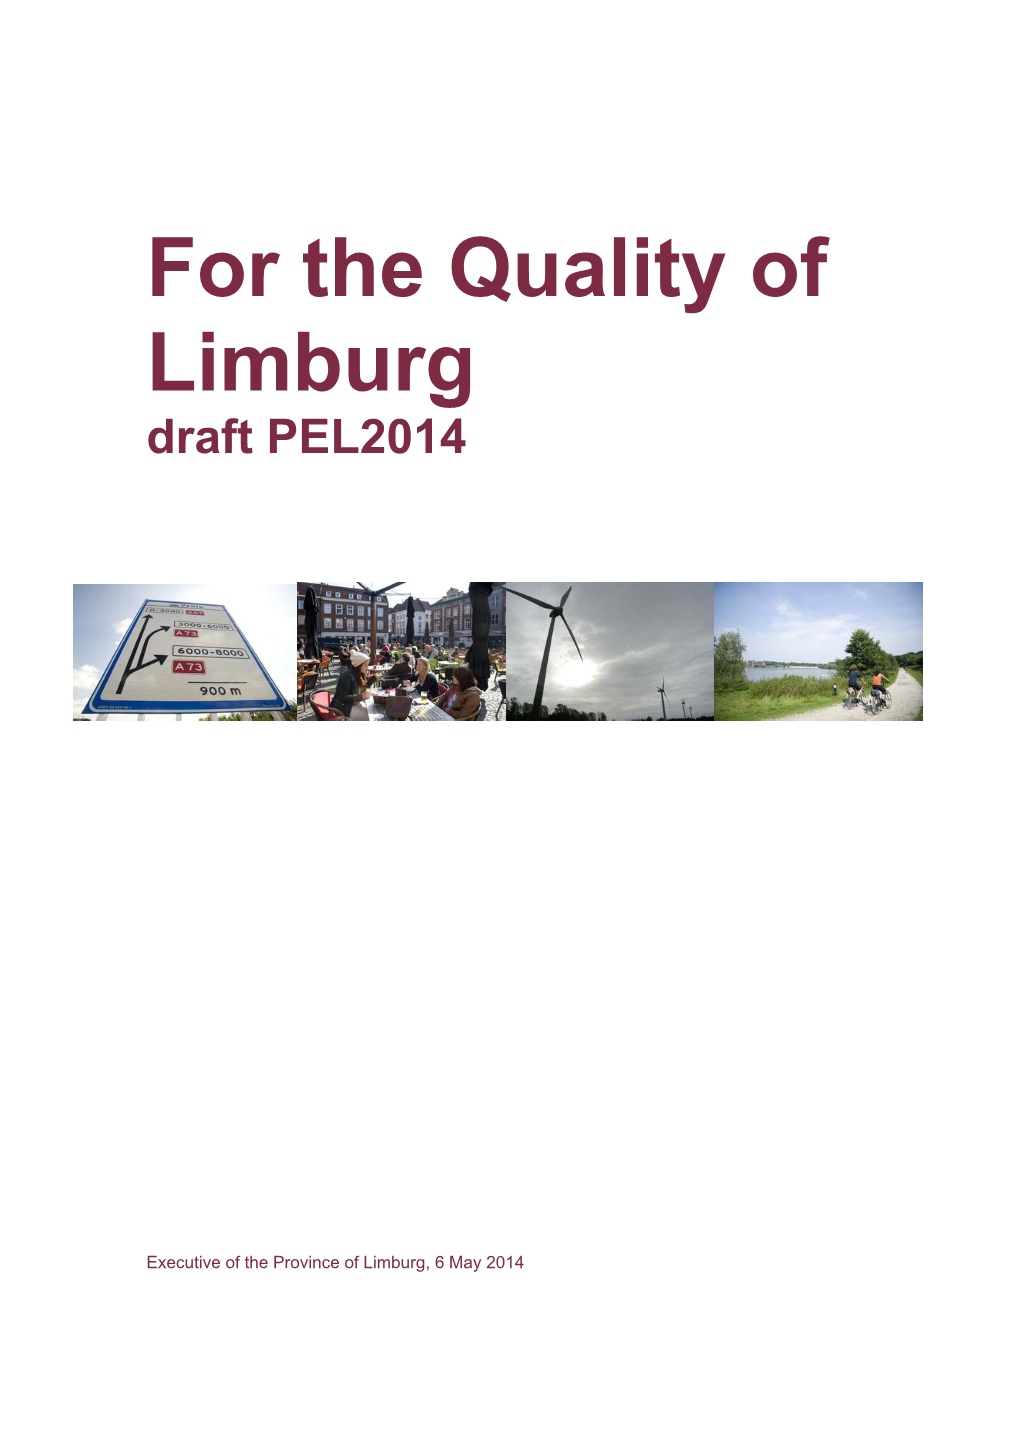 For the Quality of Limburg Draft PEL2014